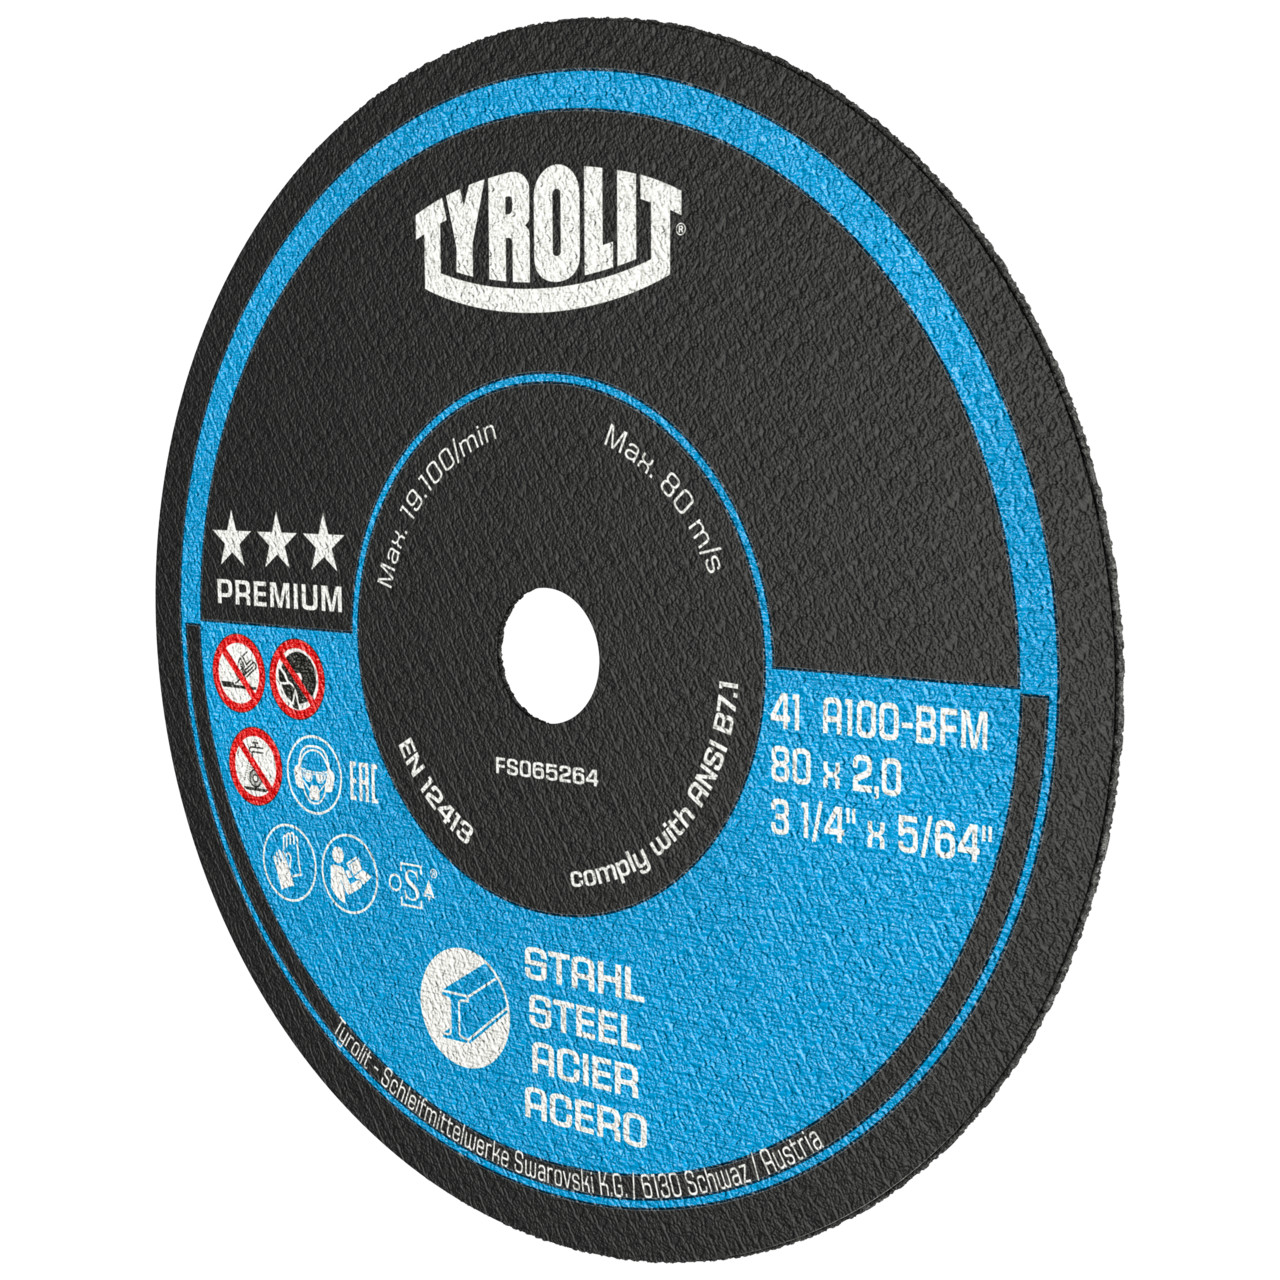 Tyrolit Discos de corte DxDxH 63x1x10 Para acero, forma: 41 - versión recta, Art. 699330